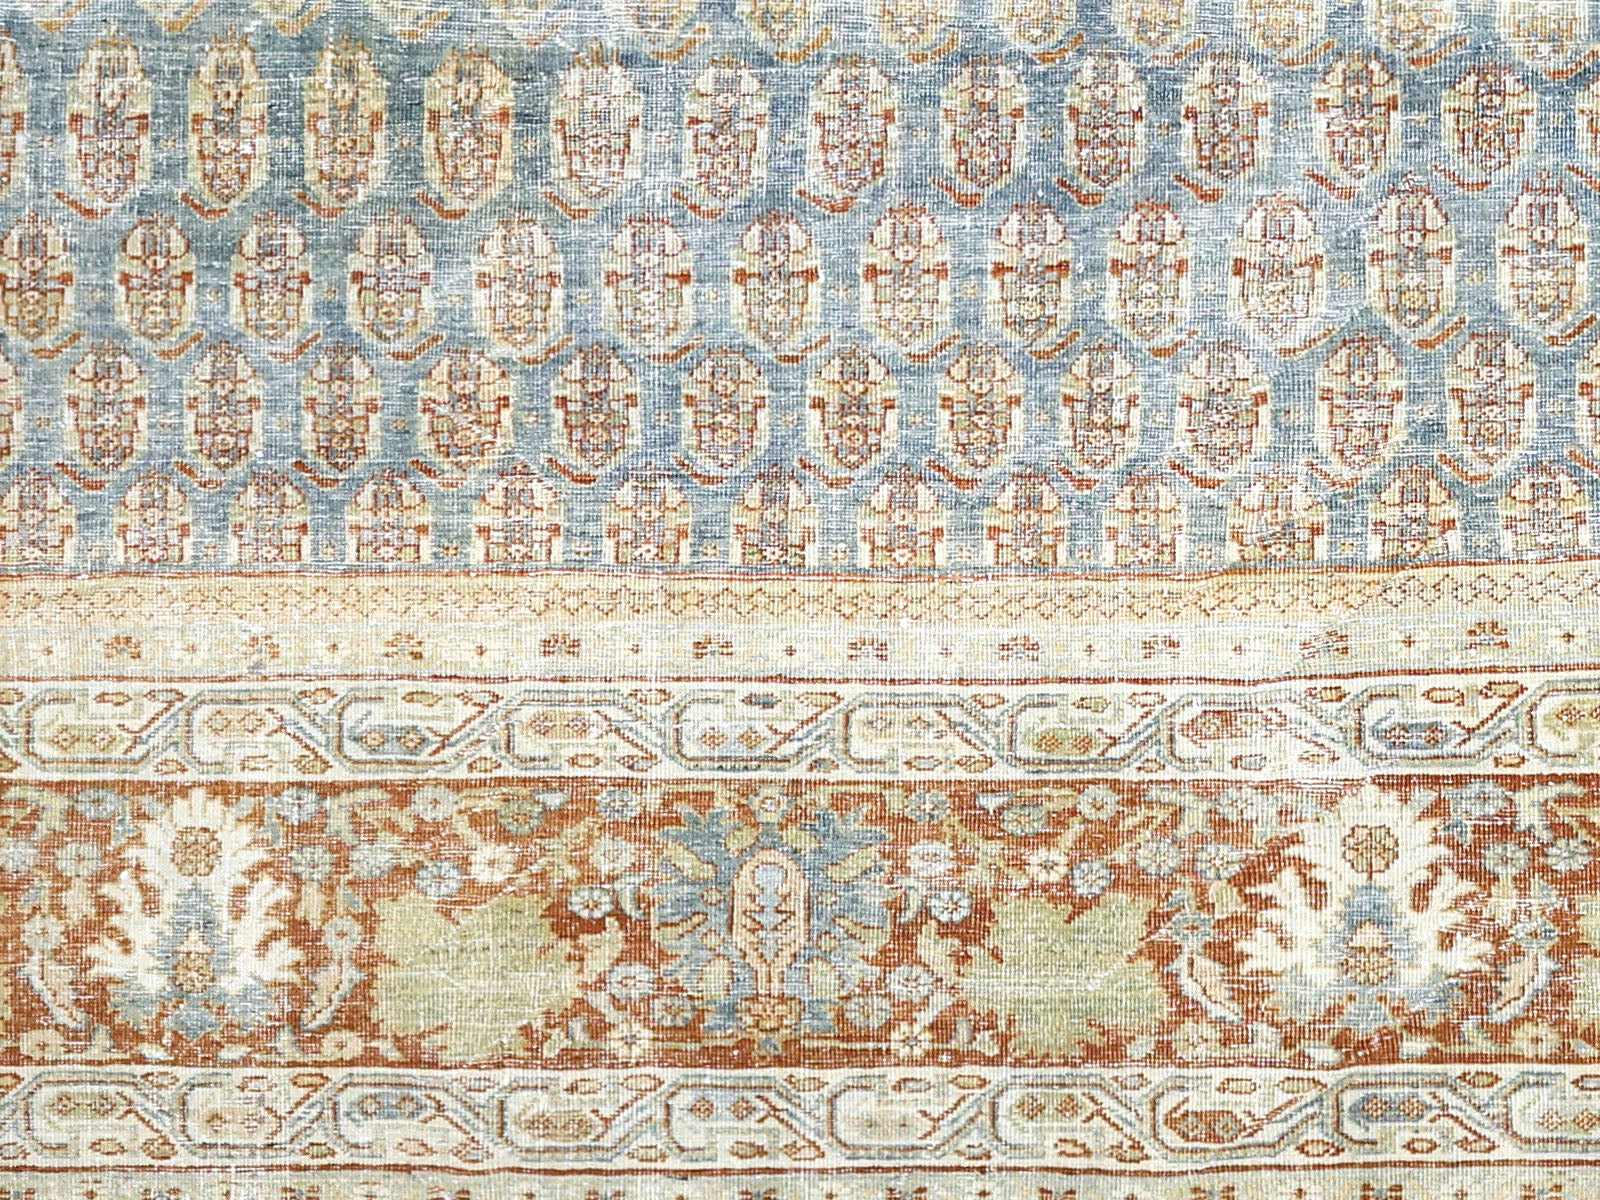 Vintage Persian Mahal Rug - 9' x 13'6"